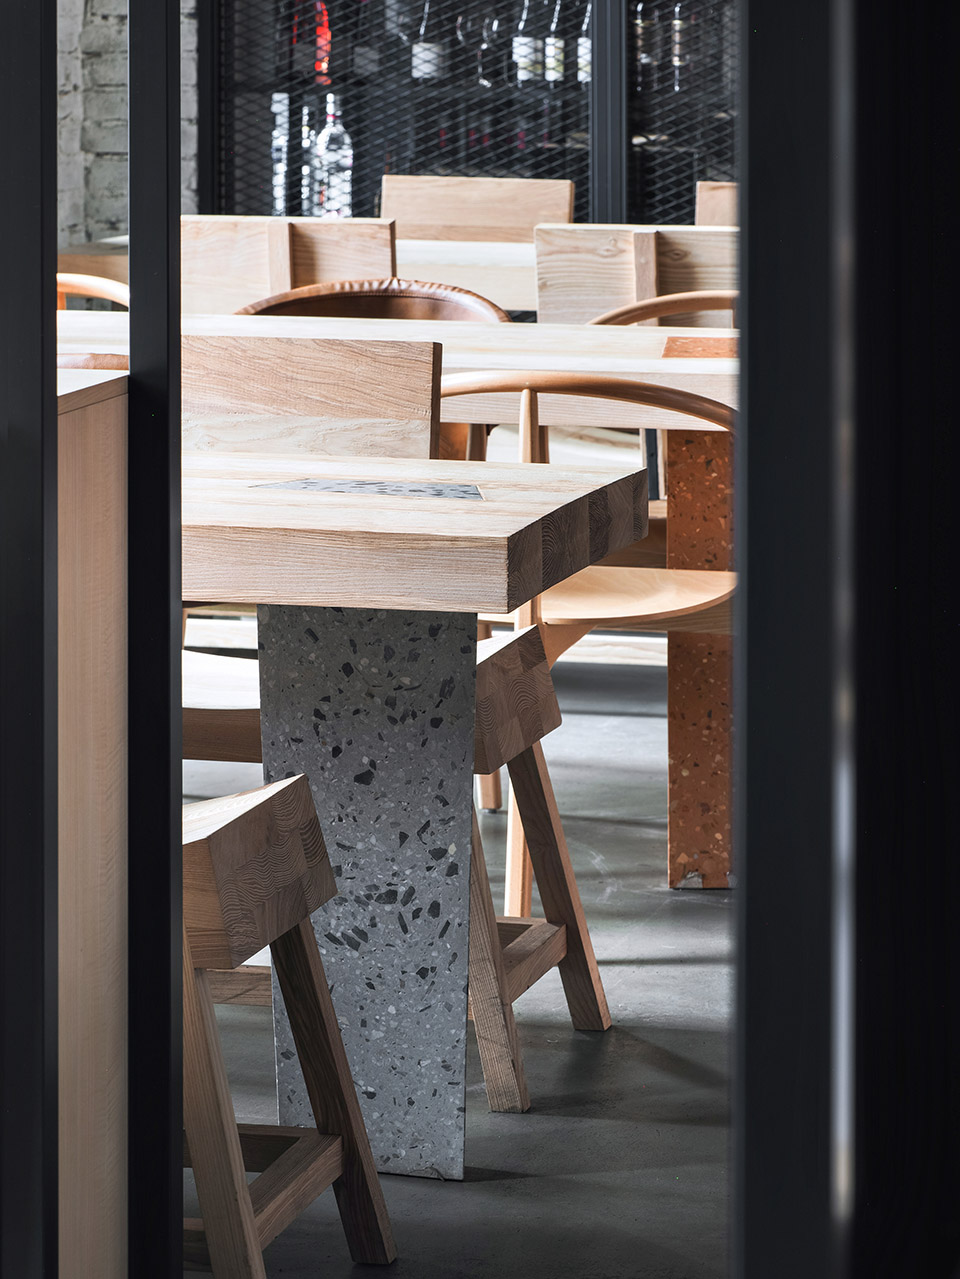 Lodbrok餐厅，圣彼得堡/将维京人魁梧有力的特征融入建筑元素之中-43